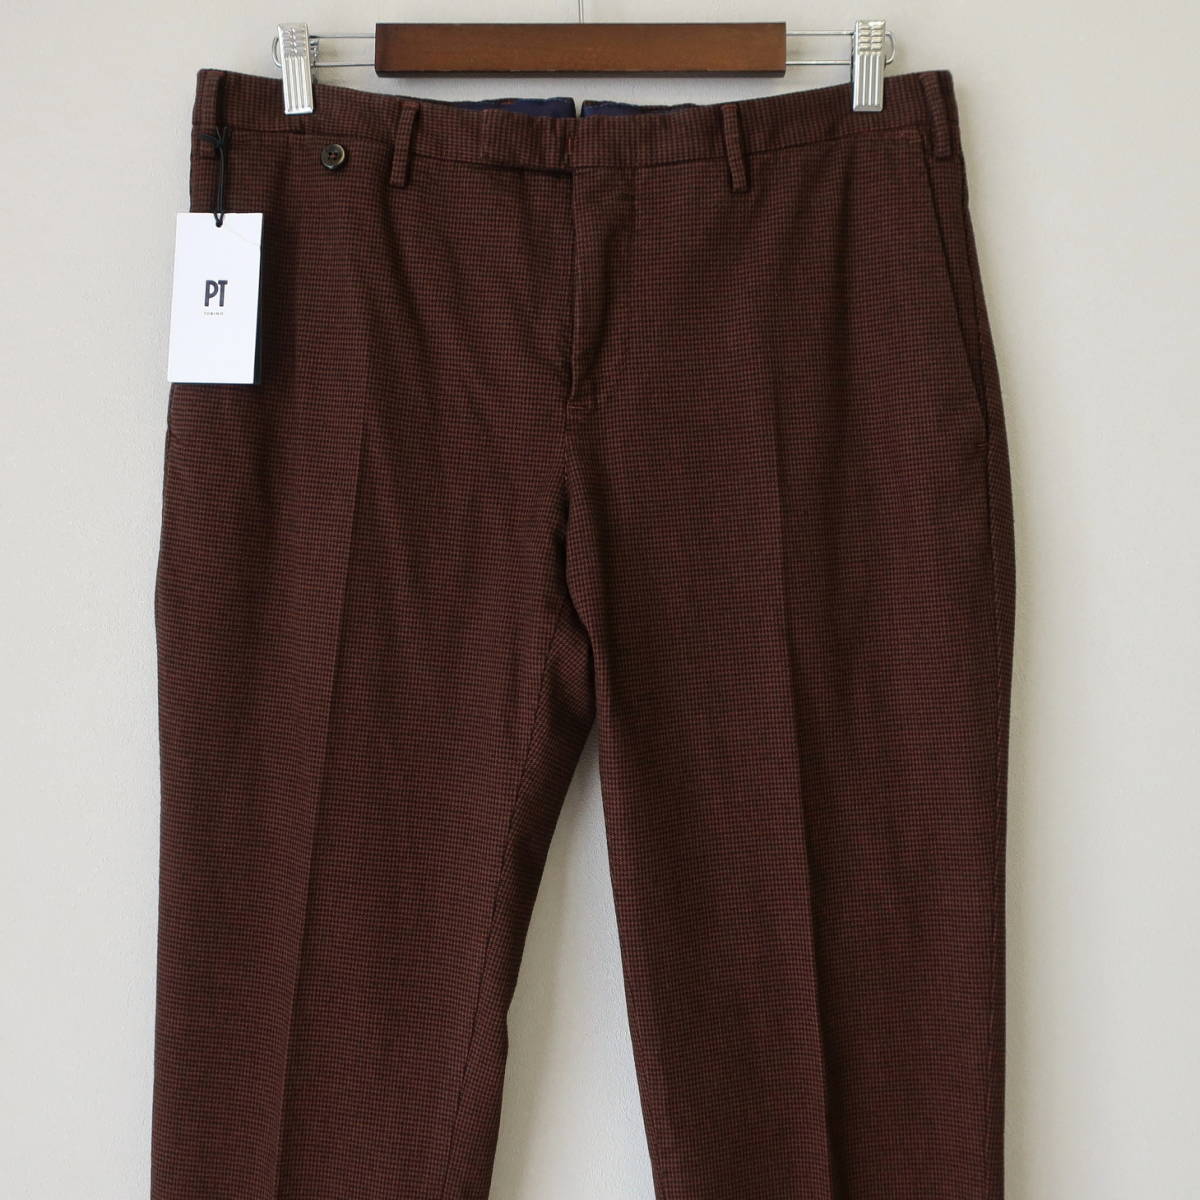  new goods PT TORINO men's micro check slim thin stretch chinos slacks total pattern pants PT01 tea color Brown 50 XL size 